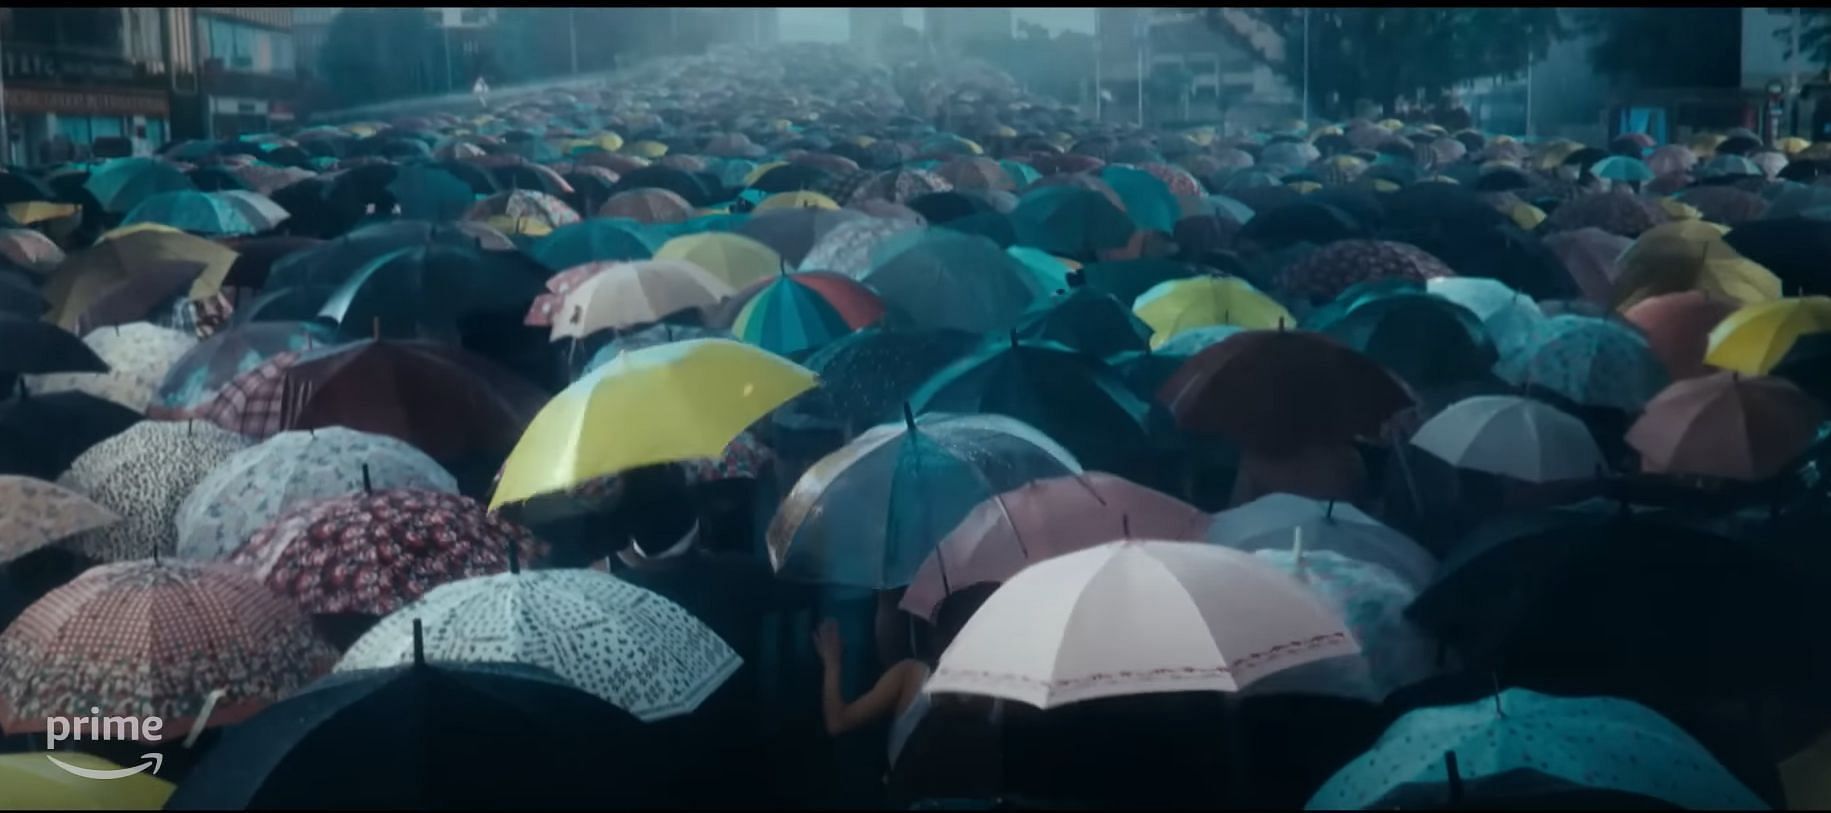 Umbrella Scene in the series (Image via Prime Video, Expats, 2:09)